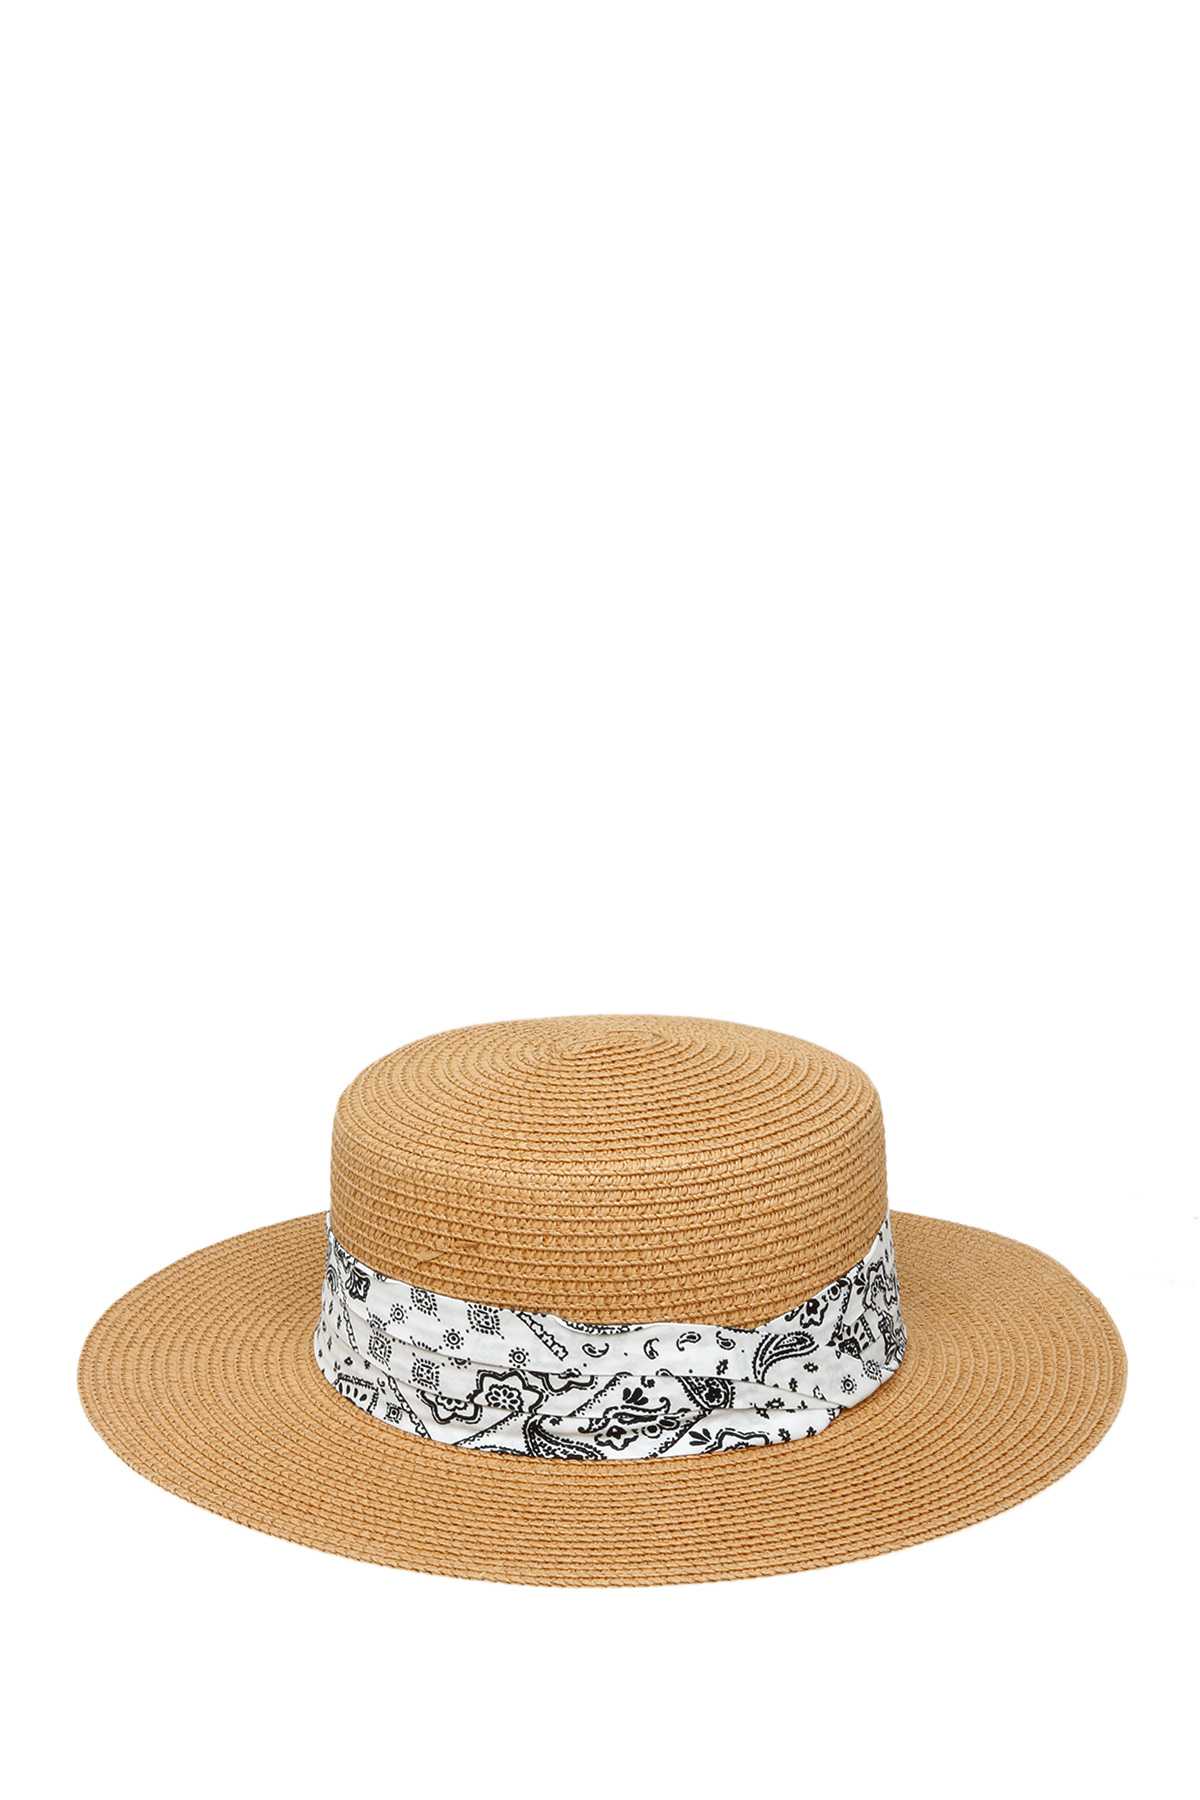 Bandana Wrap Flat Top Straw Hat